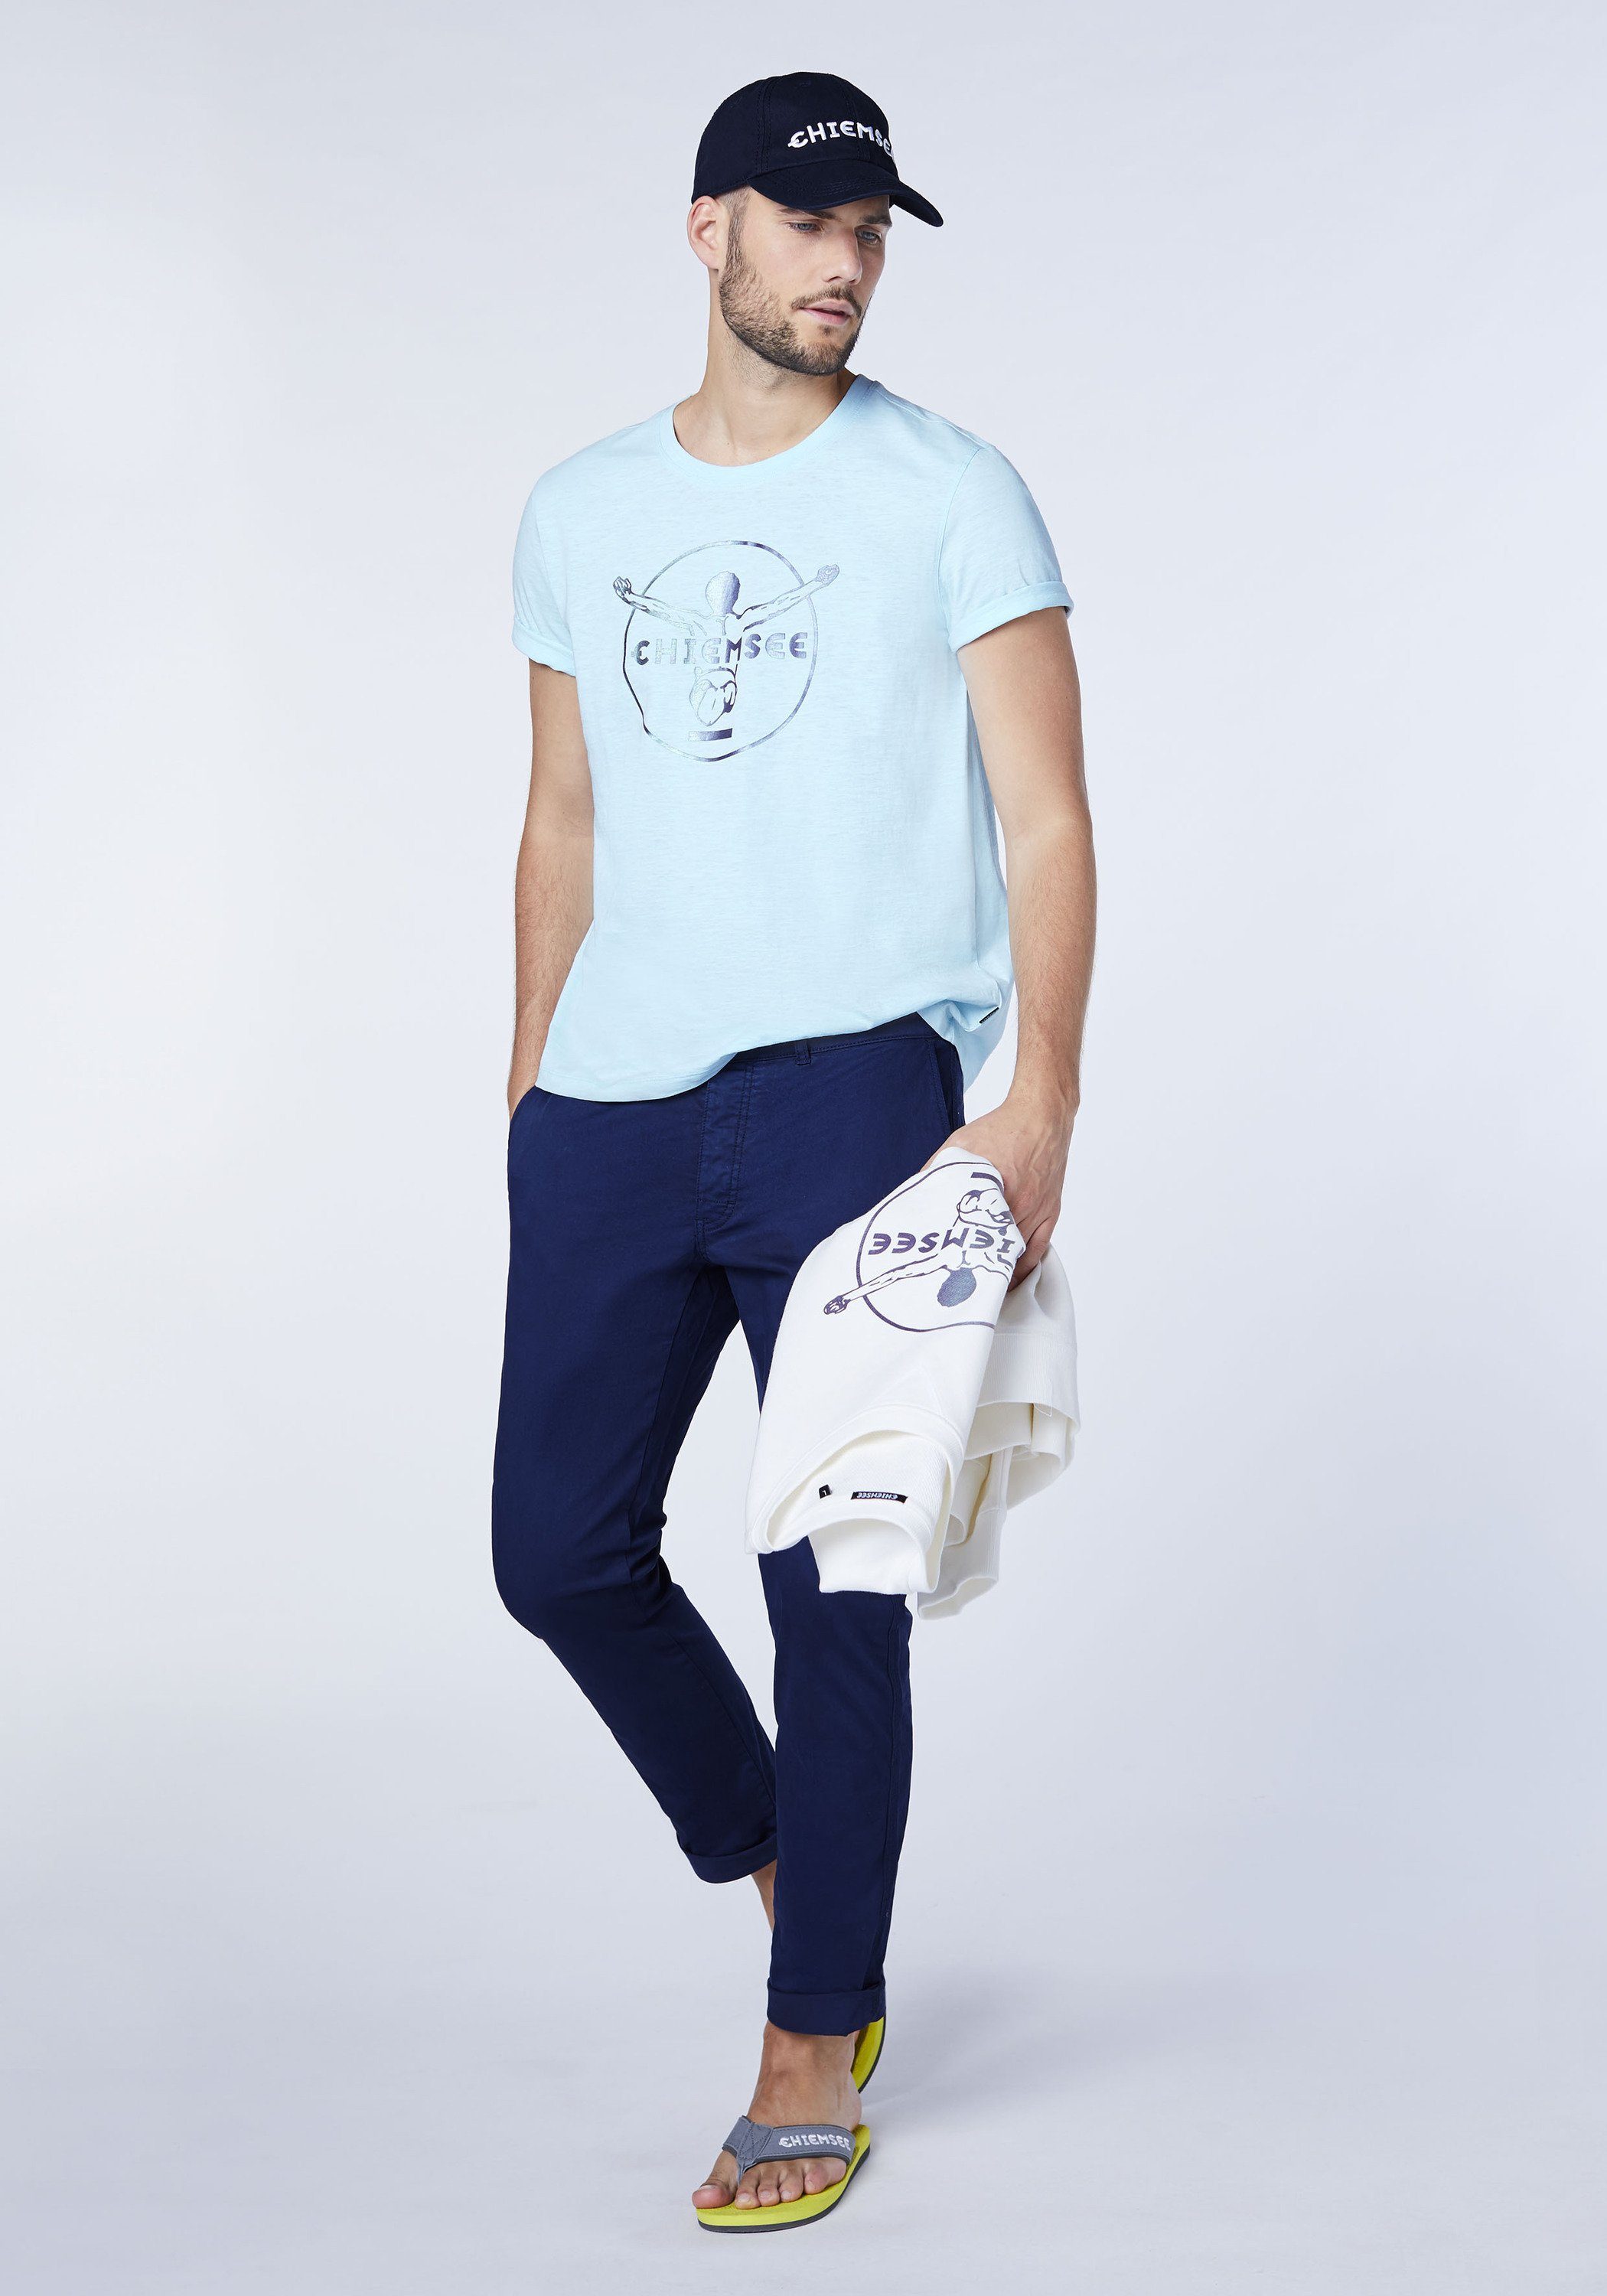 1 gedrucktem T-Shirt Label-Symbol Blue Chiemsee mit Coryda Print-Shirt